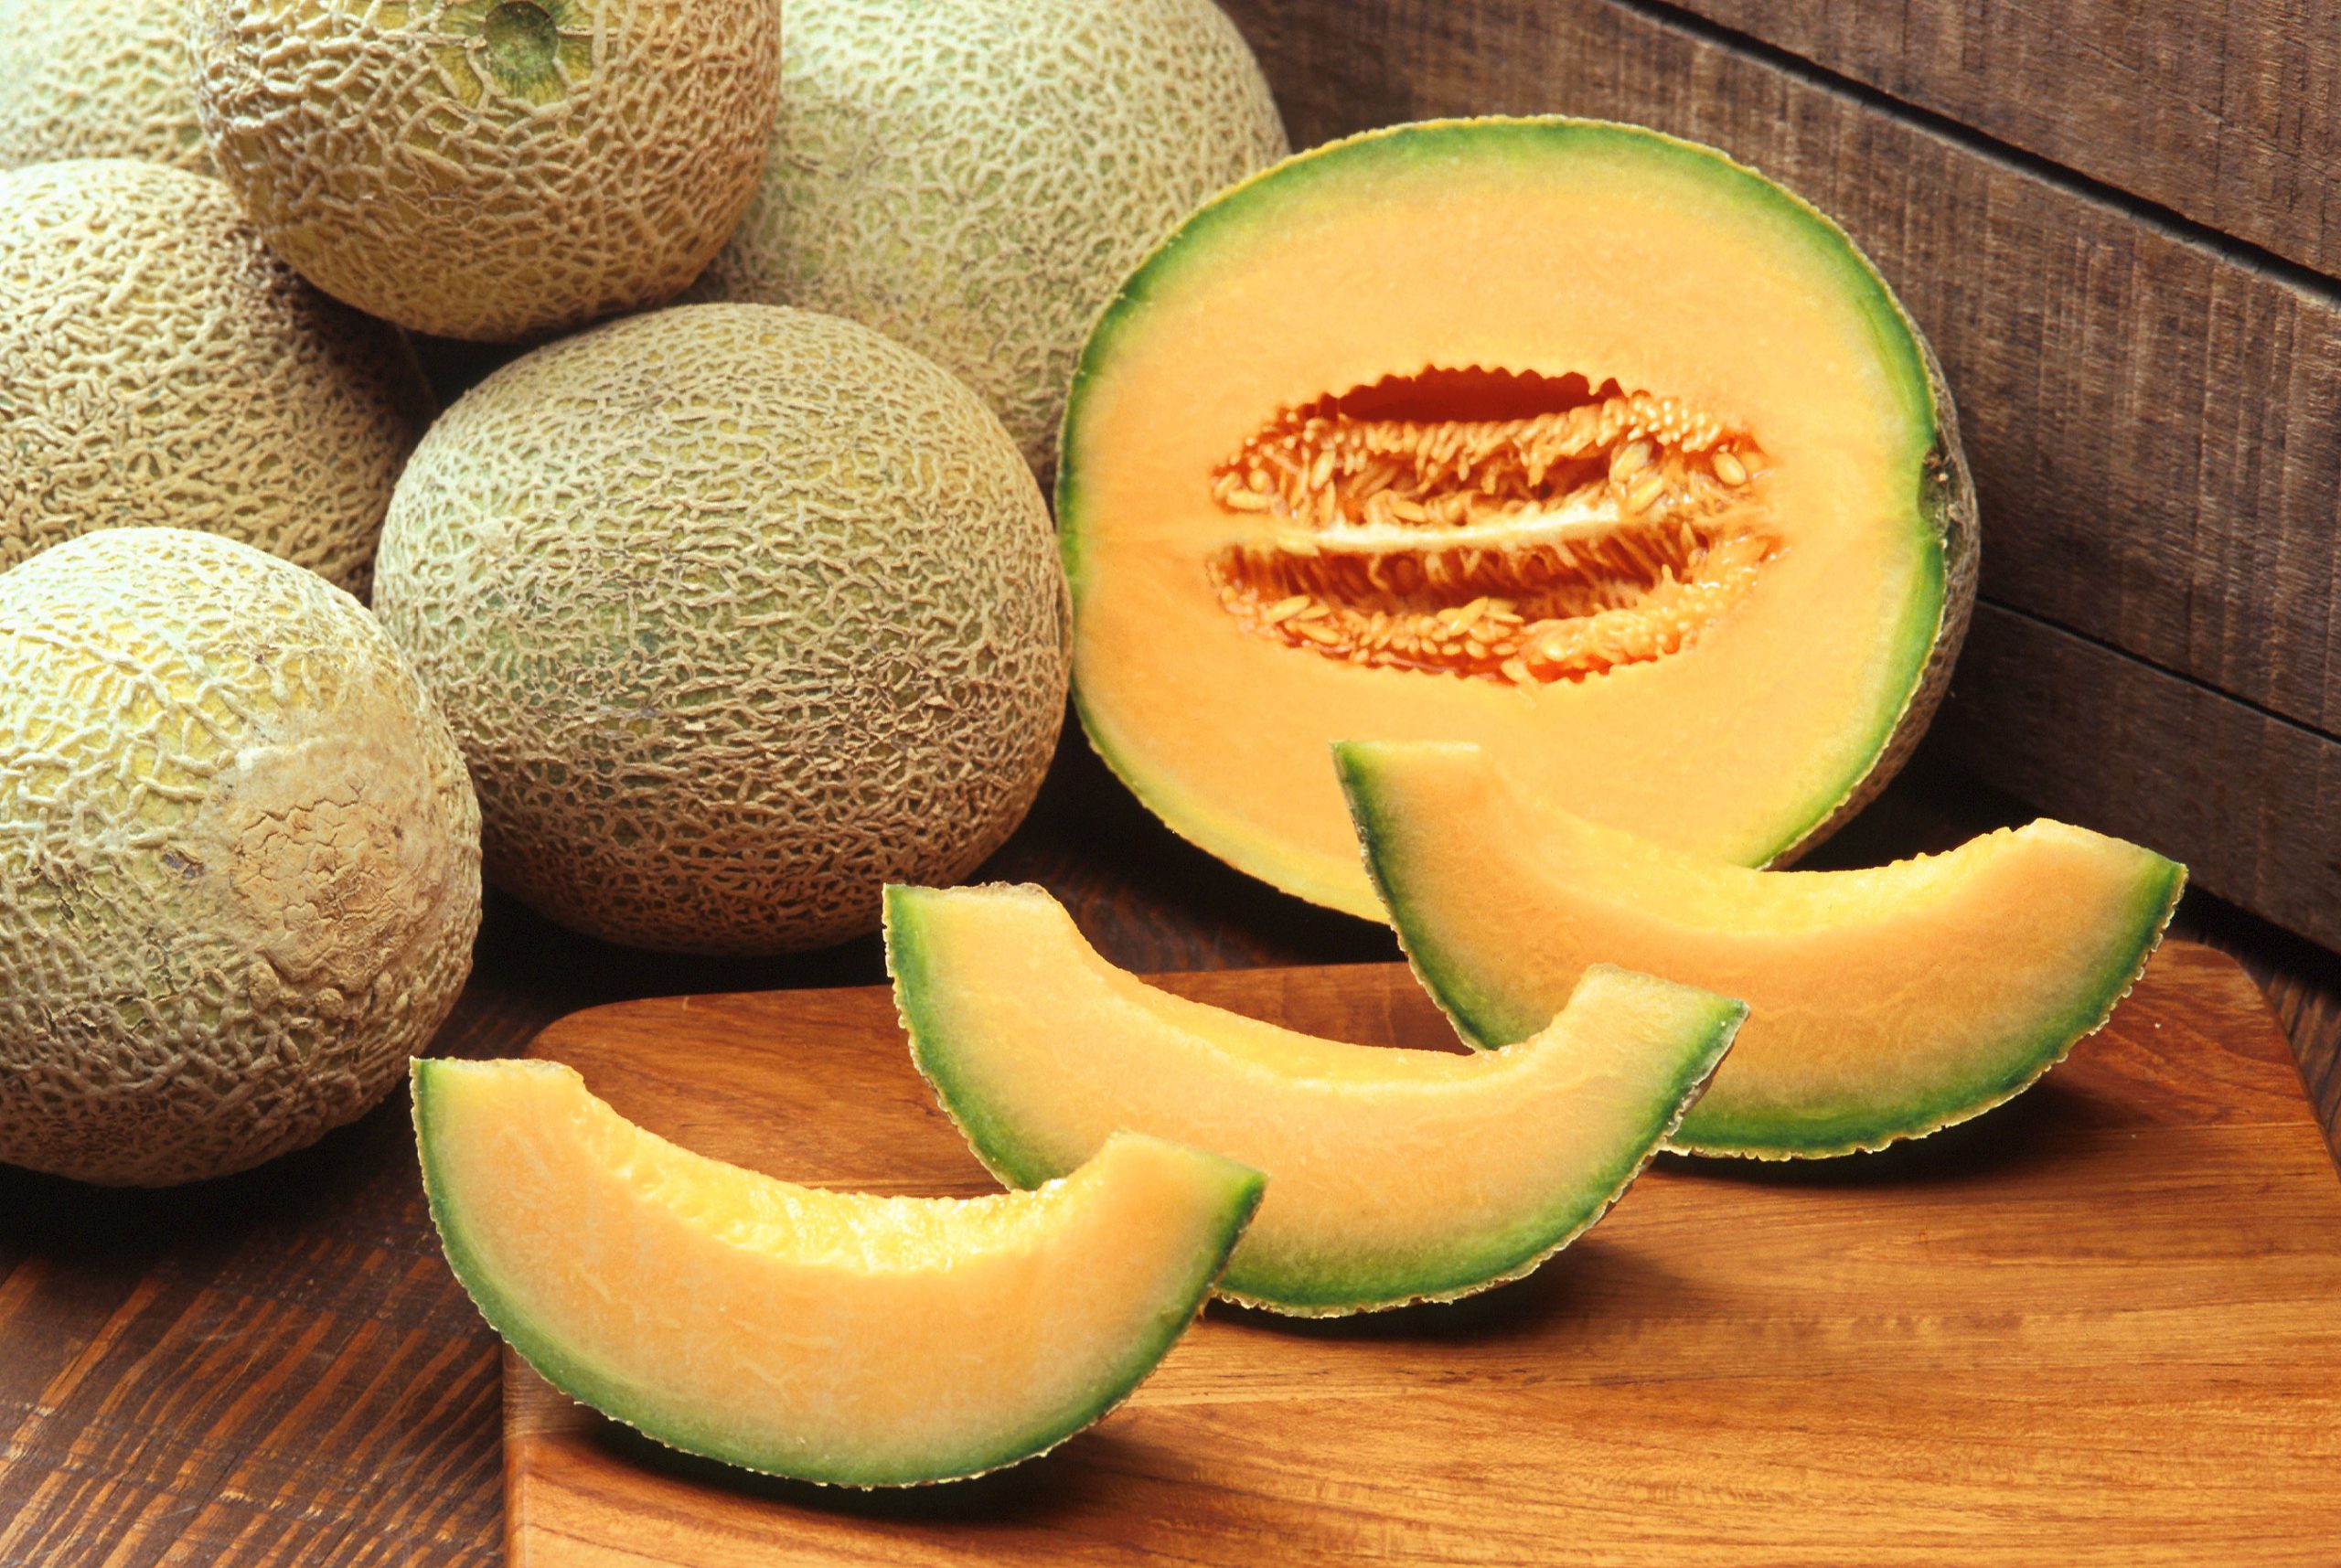 Manfaat Melon